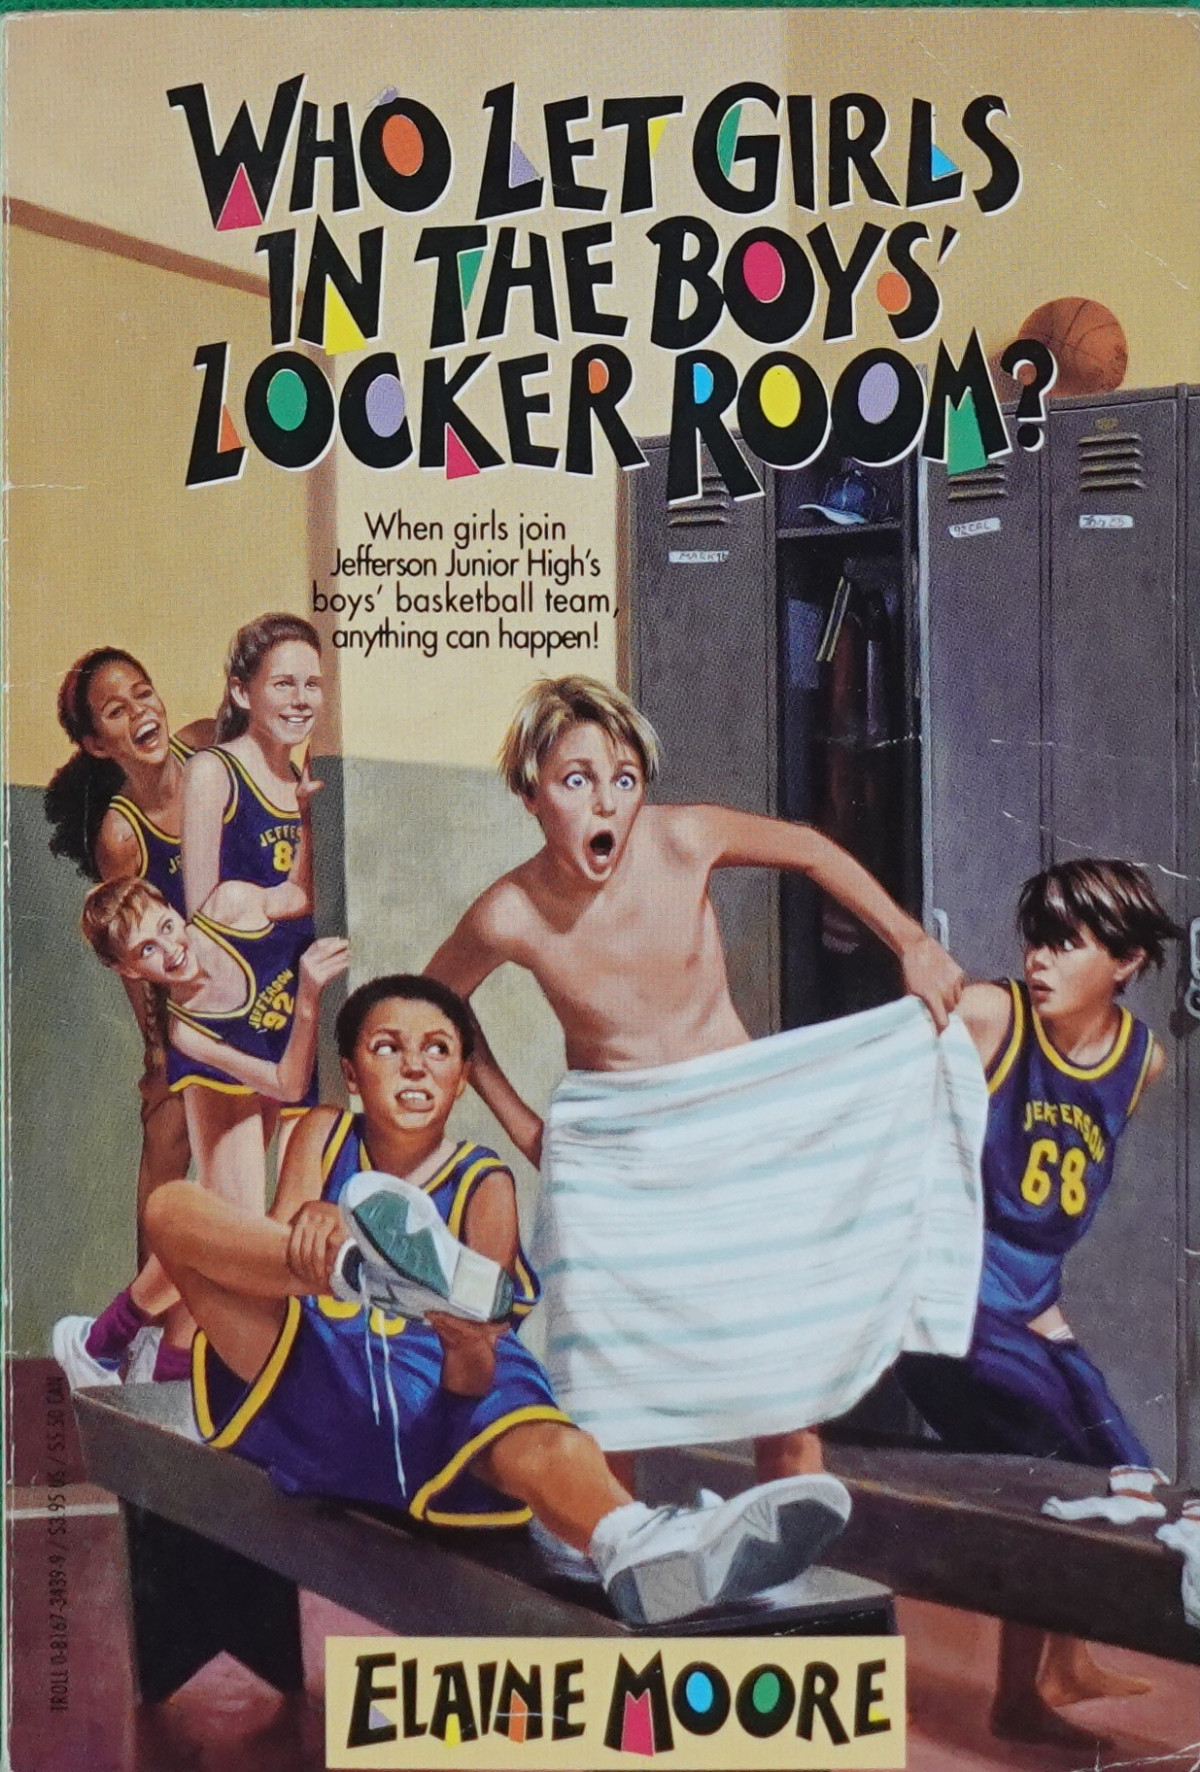 who let girls in the boys locker room?